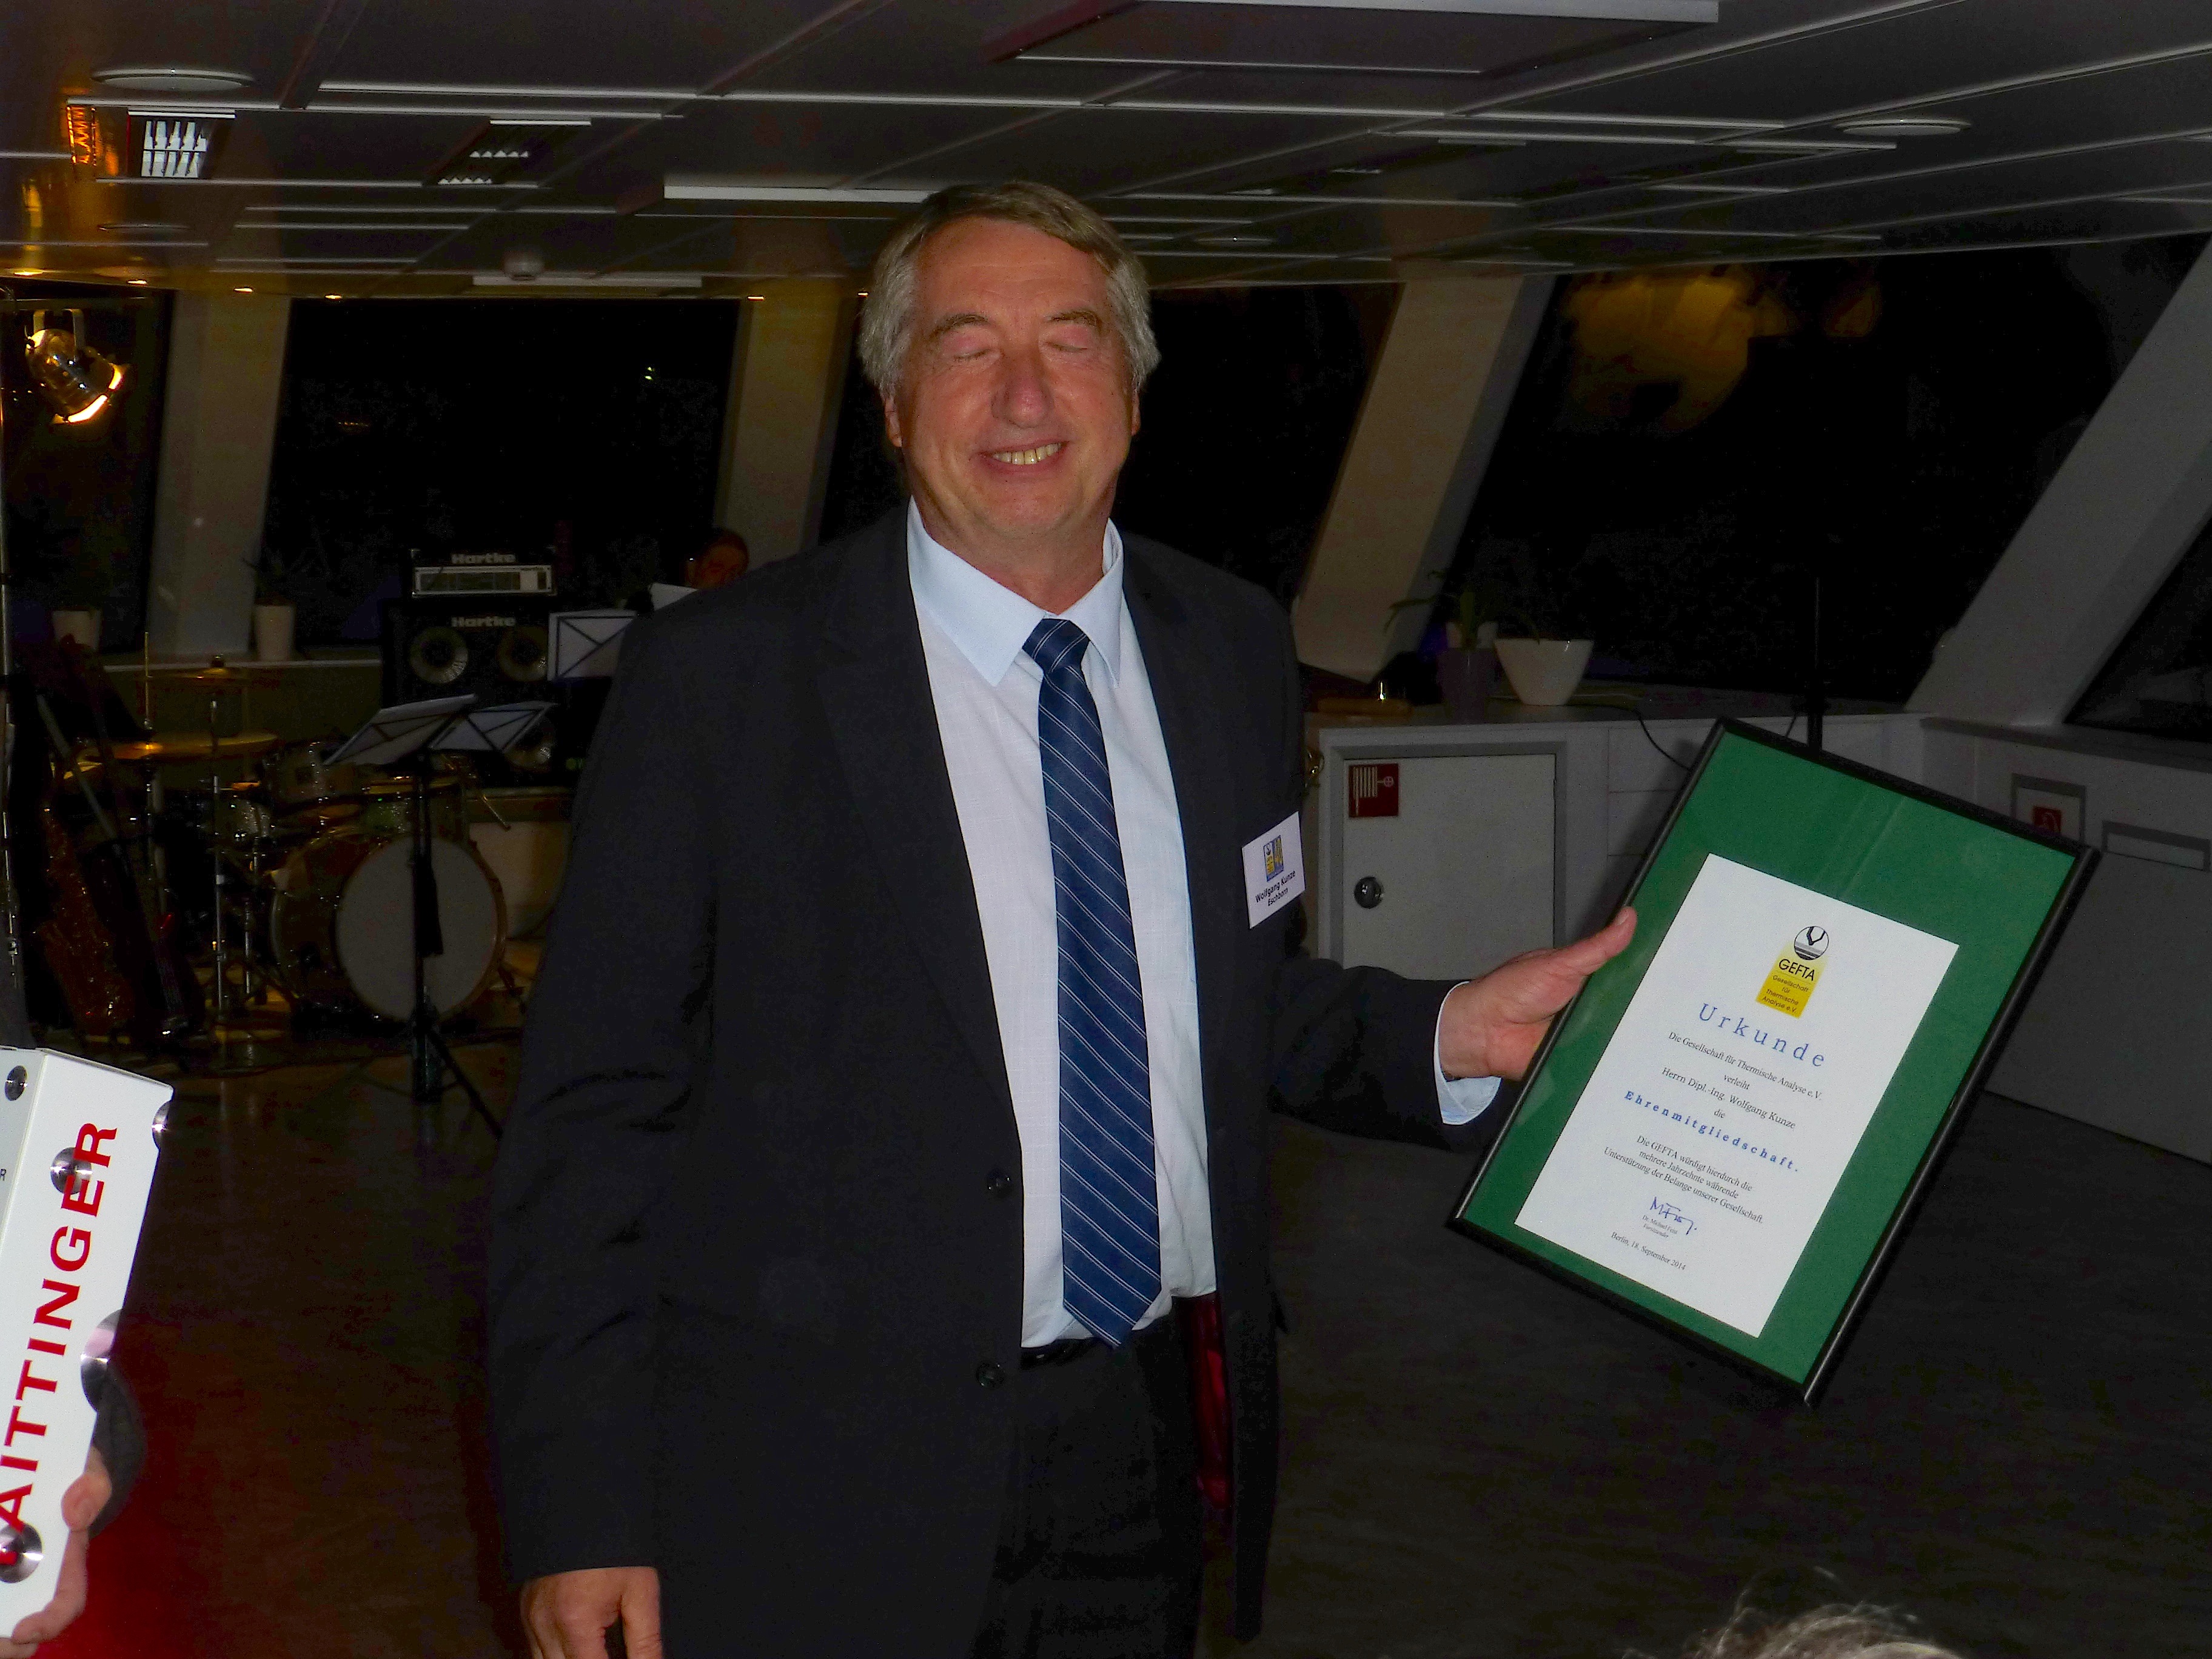 Verleihung der Ehrenmitgliedschaft an Herrn Wolfgang Kunze